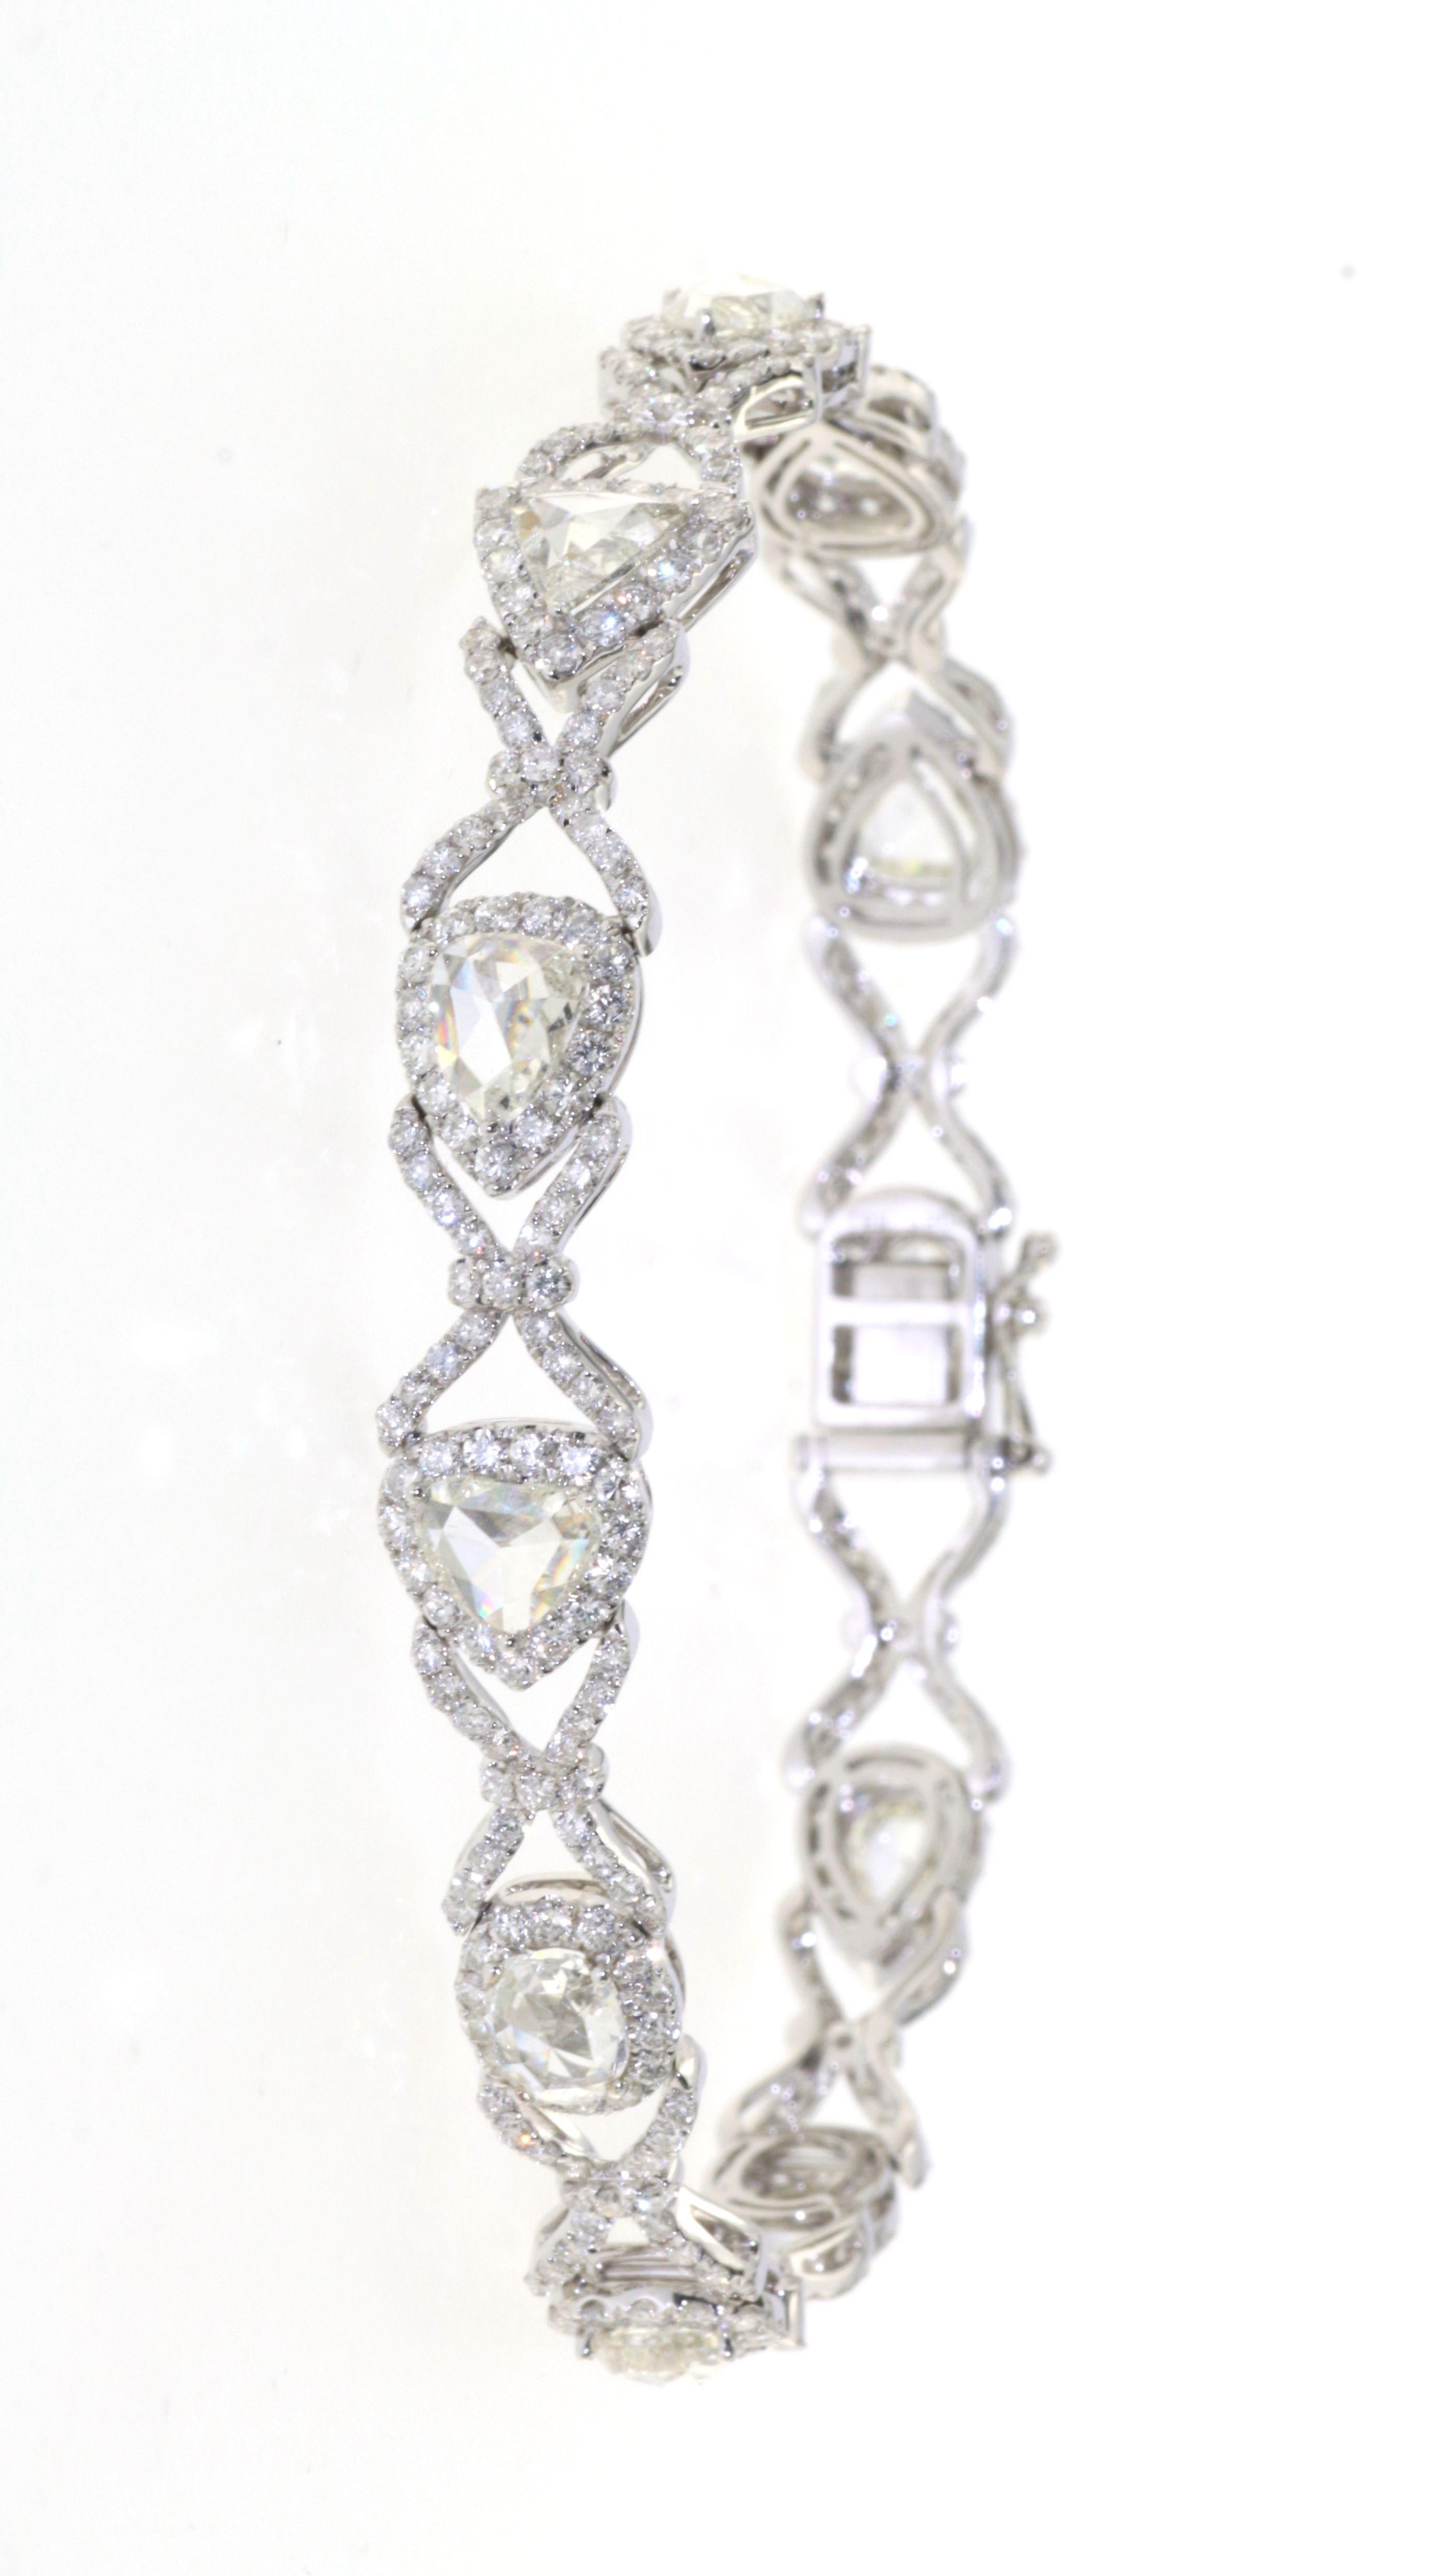 This rose cut diamond bracelet features 11 pieces of rose cut diamonds weight 4.24 carats and 3.50 carats of round brilliance diamonds set in 18K white gold. The length of the bracelet is 17.5cm.

Rose Cut Daimond 4.24 carat
Round Diamond 3.50 carat